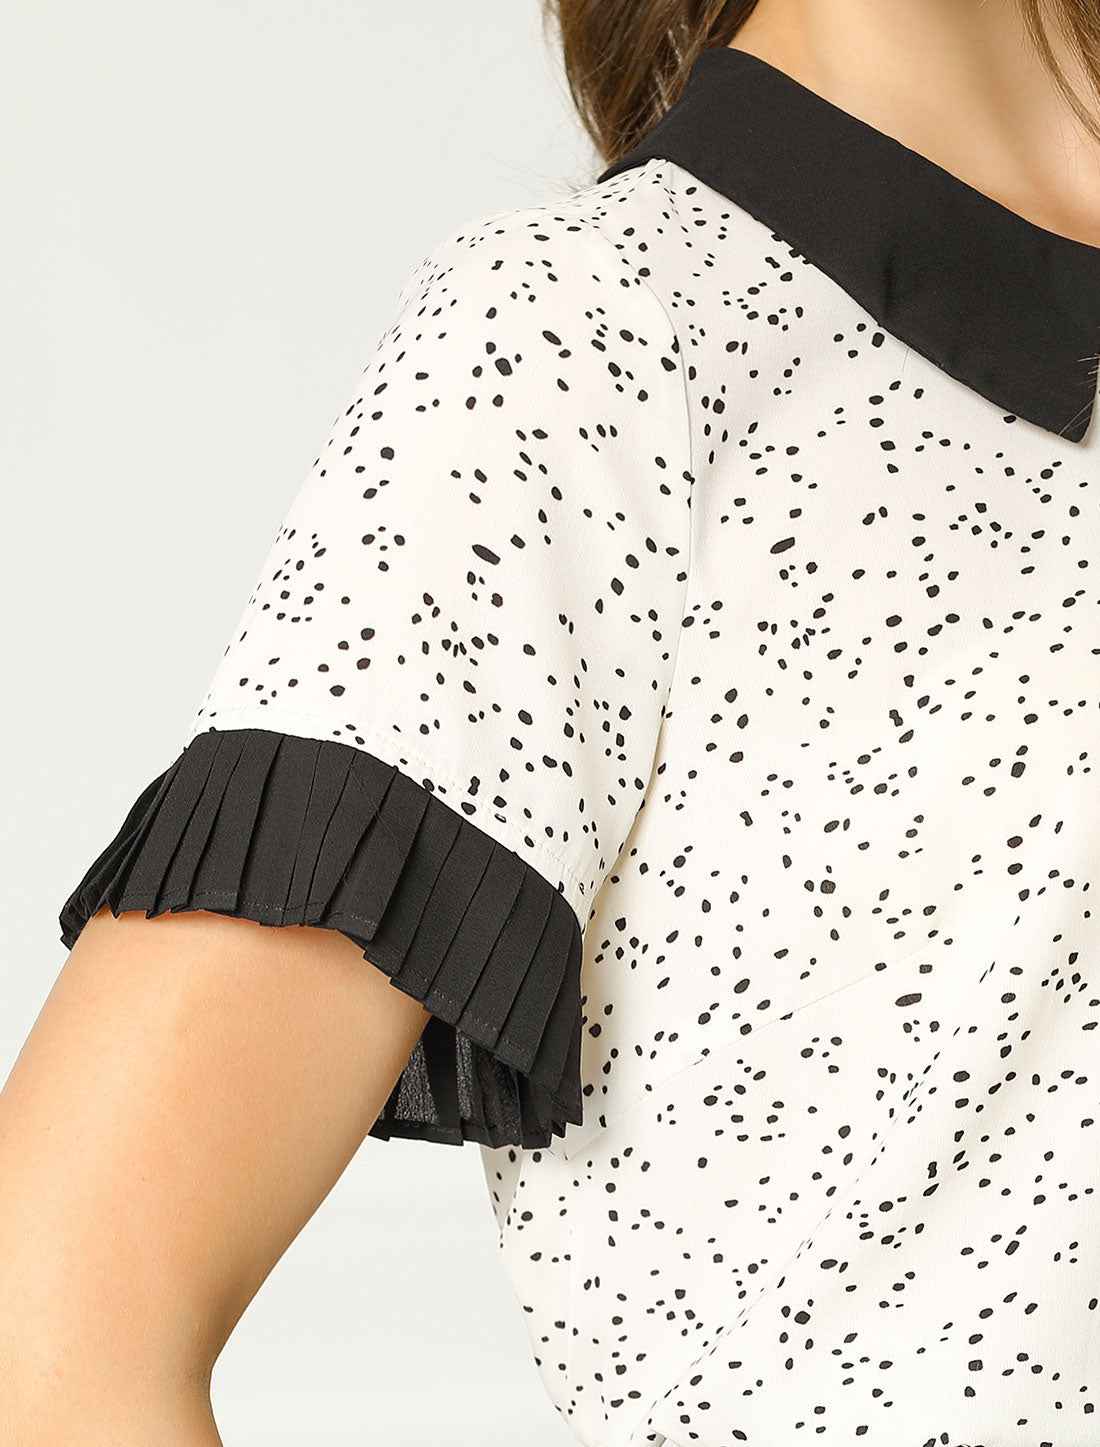 Allegra K Contrast Doll Collar Polka Dots Tops Short Sleeve Blouse